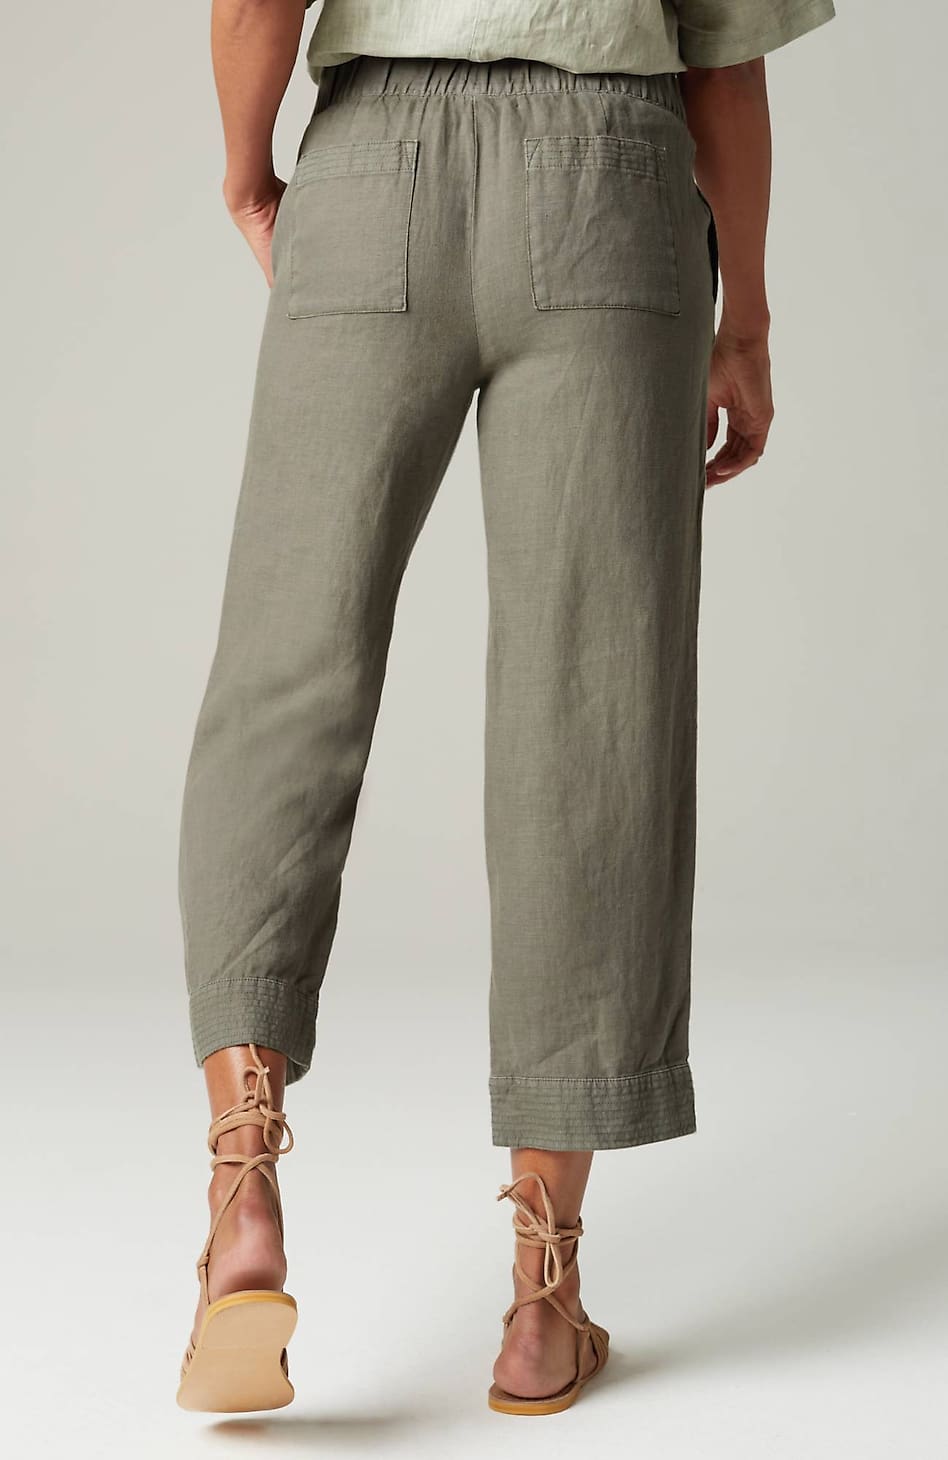 NWT - J. JILL Love Linen black Pull-on Elastic Waist Pants - Large Mis –  CommunityWorx Thrift Online